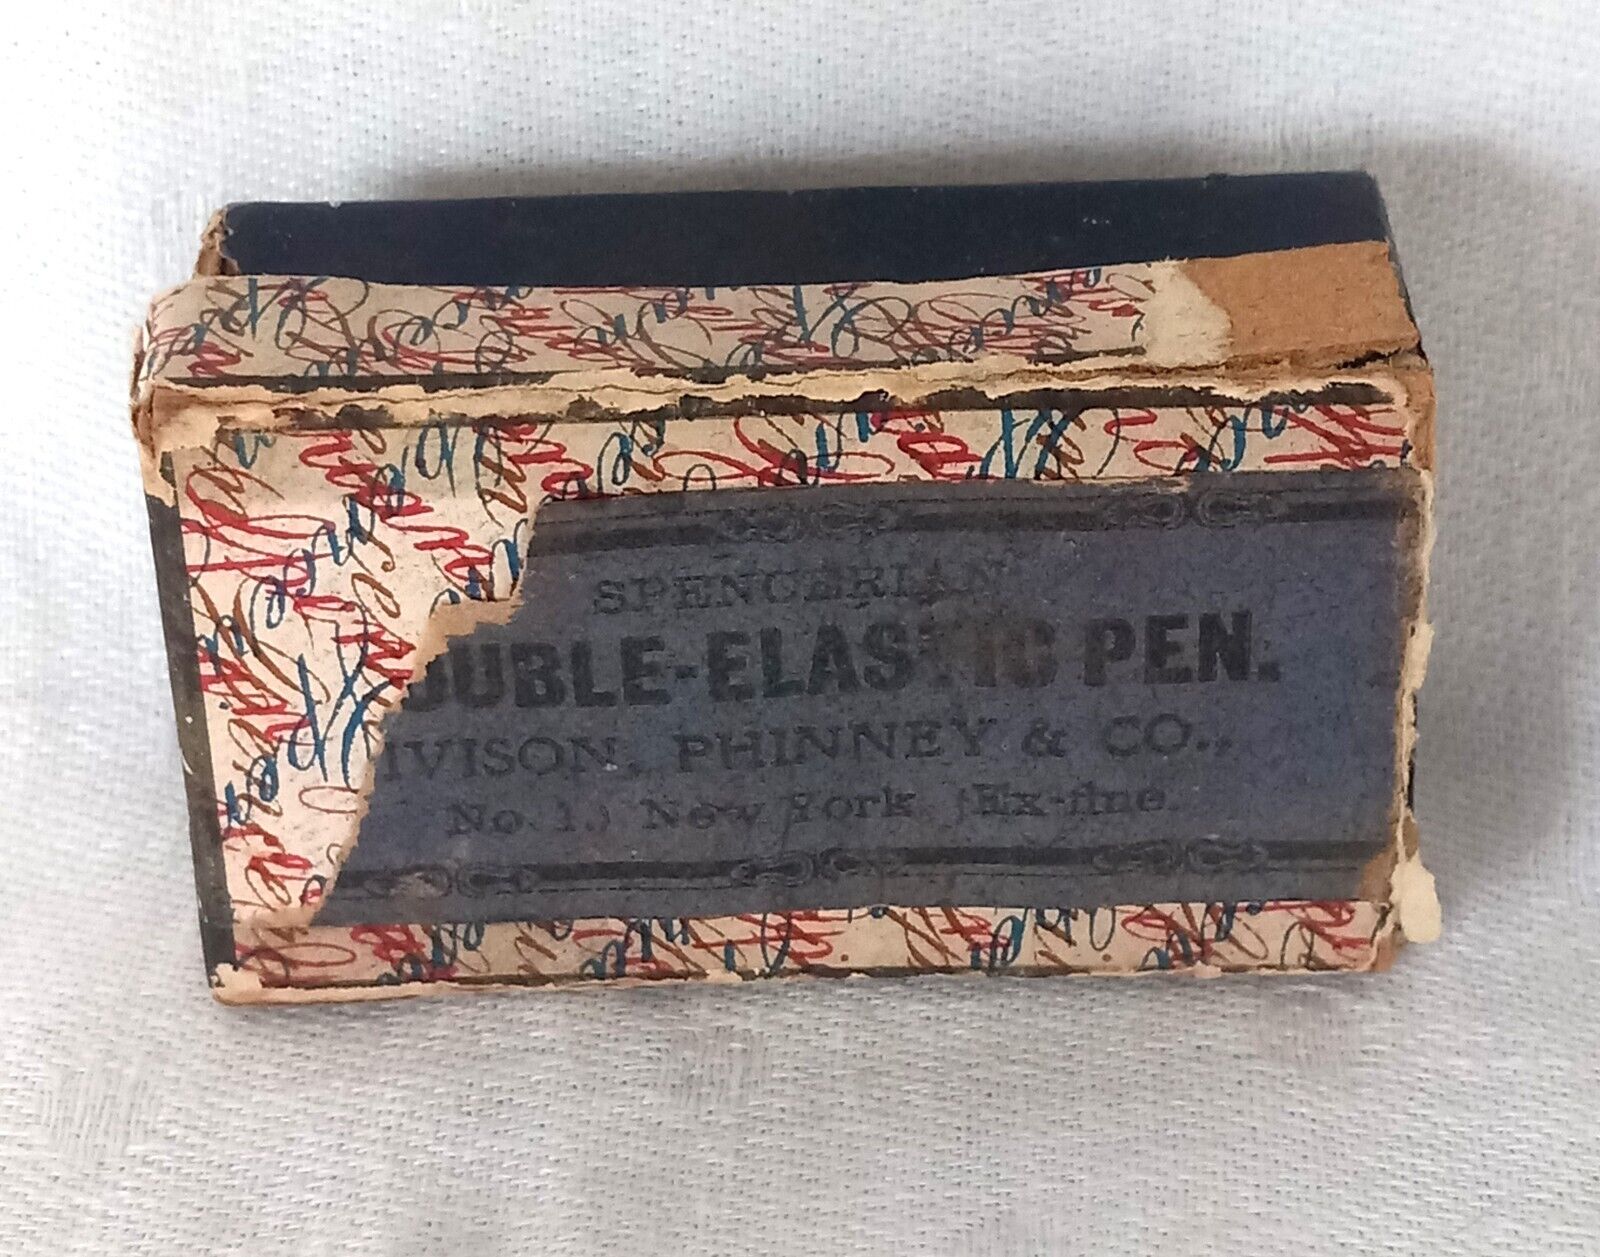 Ivison Phinney & Co. Spencerian Double Elastic Pen Nibs